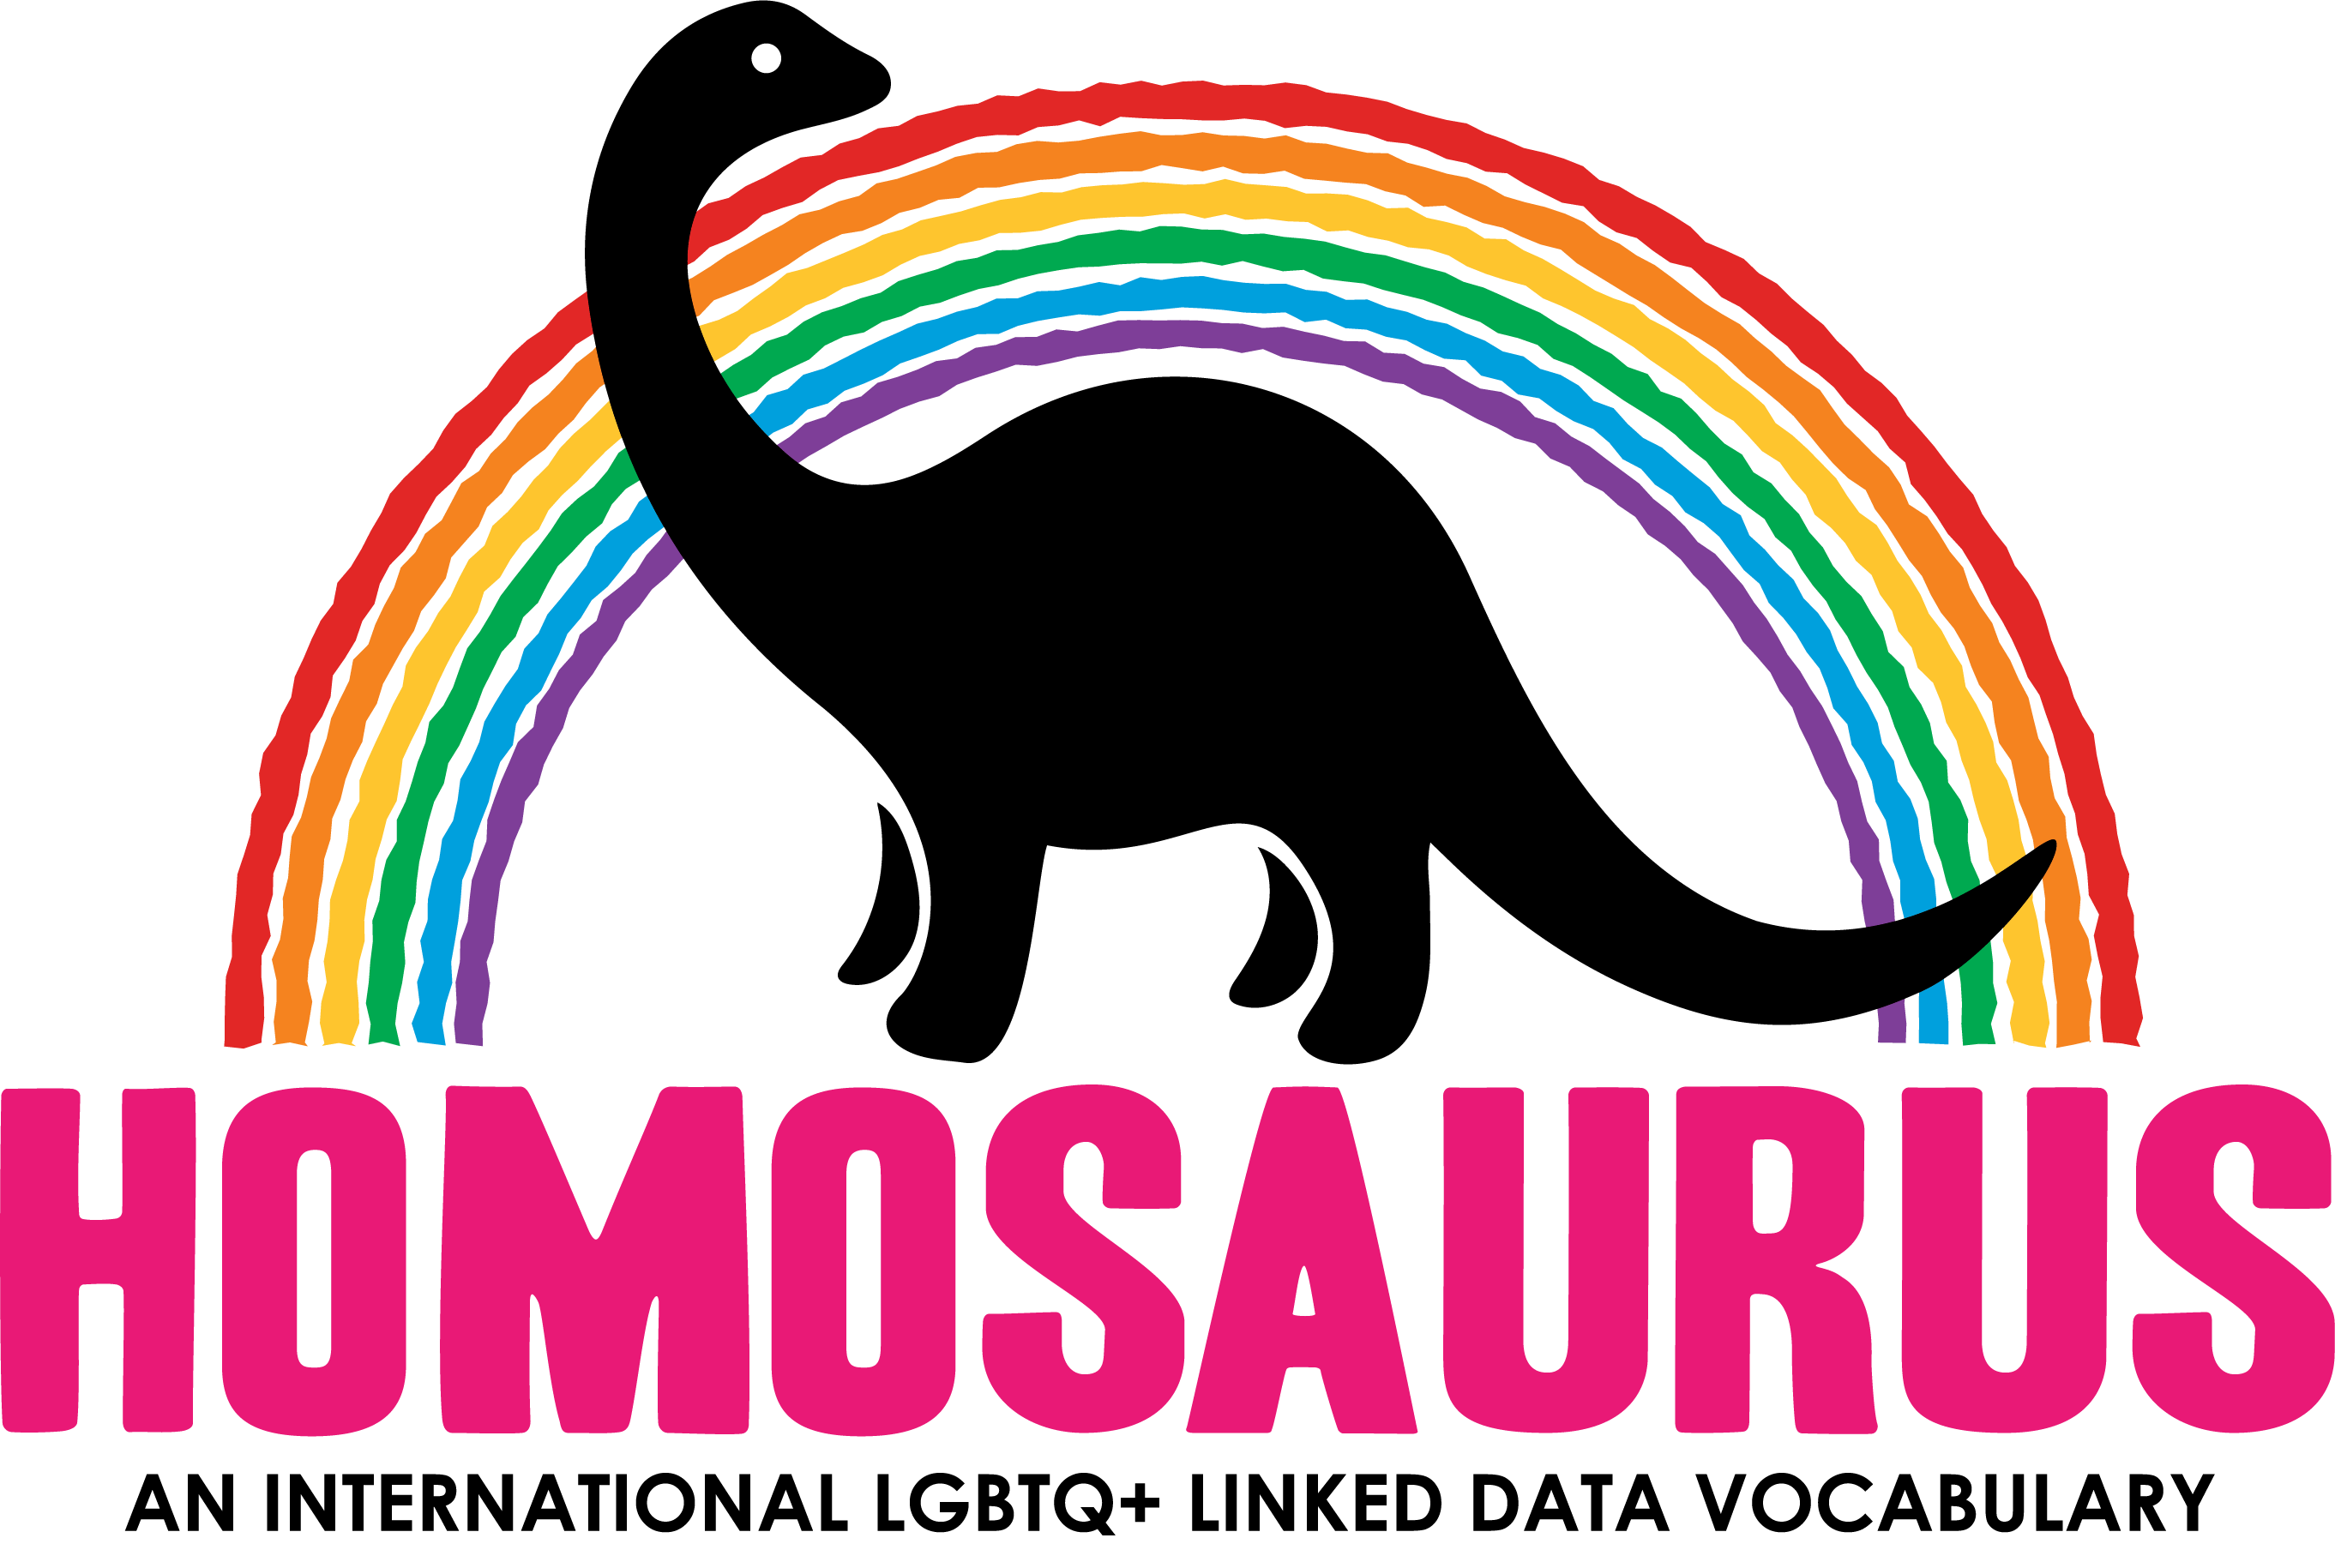 Homosaurus.org logo